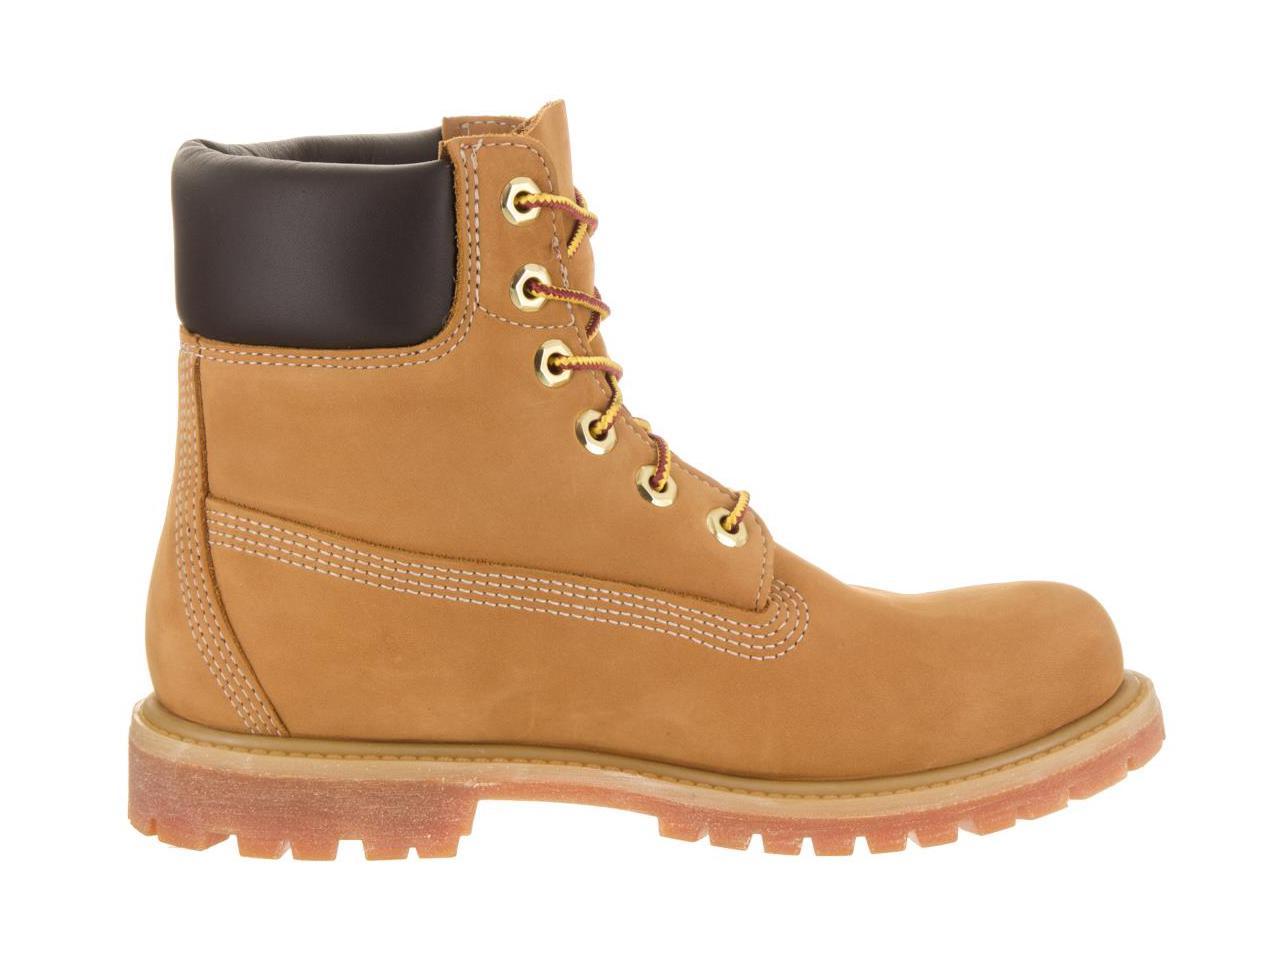 Timberland Premium Waterproof Wheat Nubuck Women's Boots 10361 Size 11M